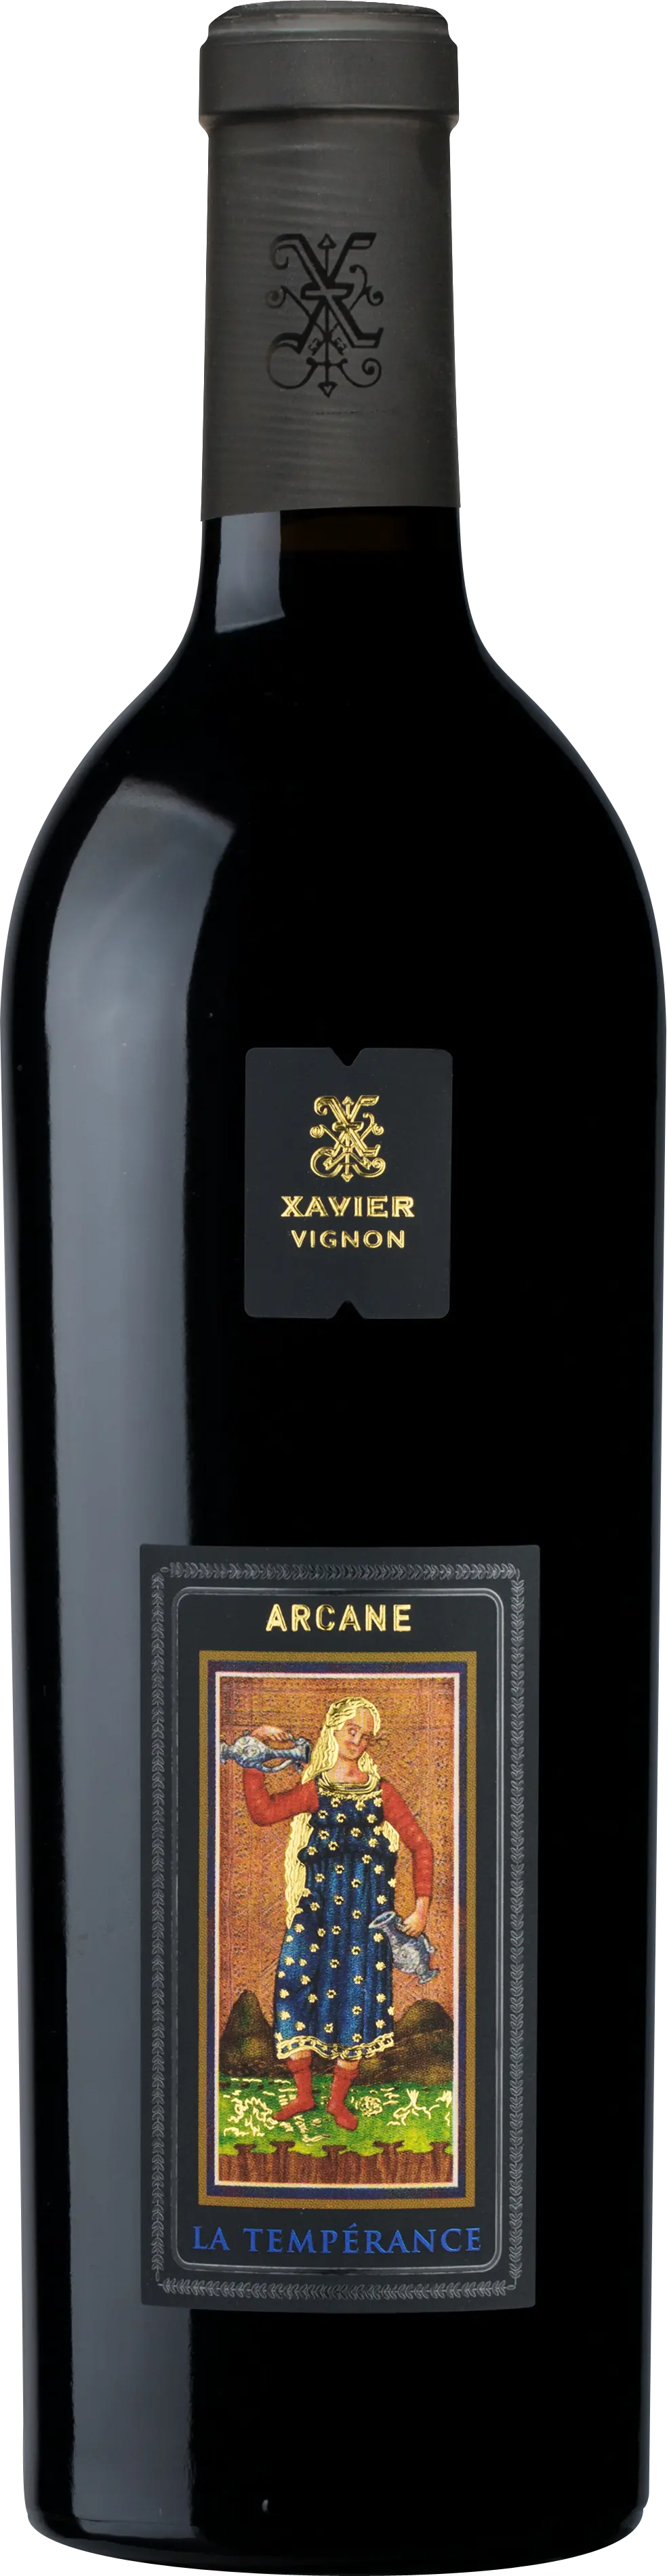 Arcane Le Temperance, Xavier Vignon (1x75cl) - TwoMoreGlasses.com